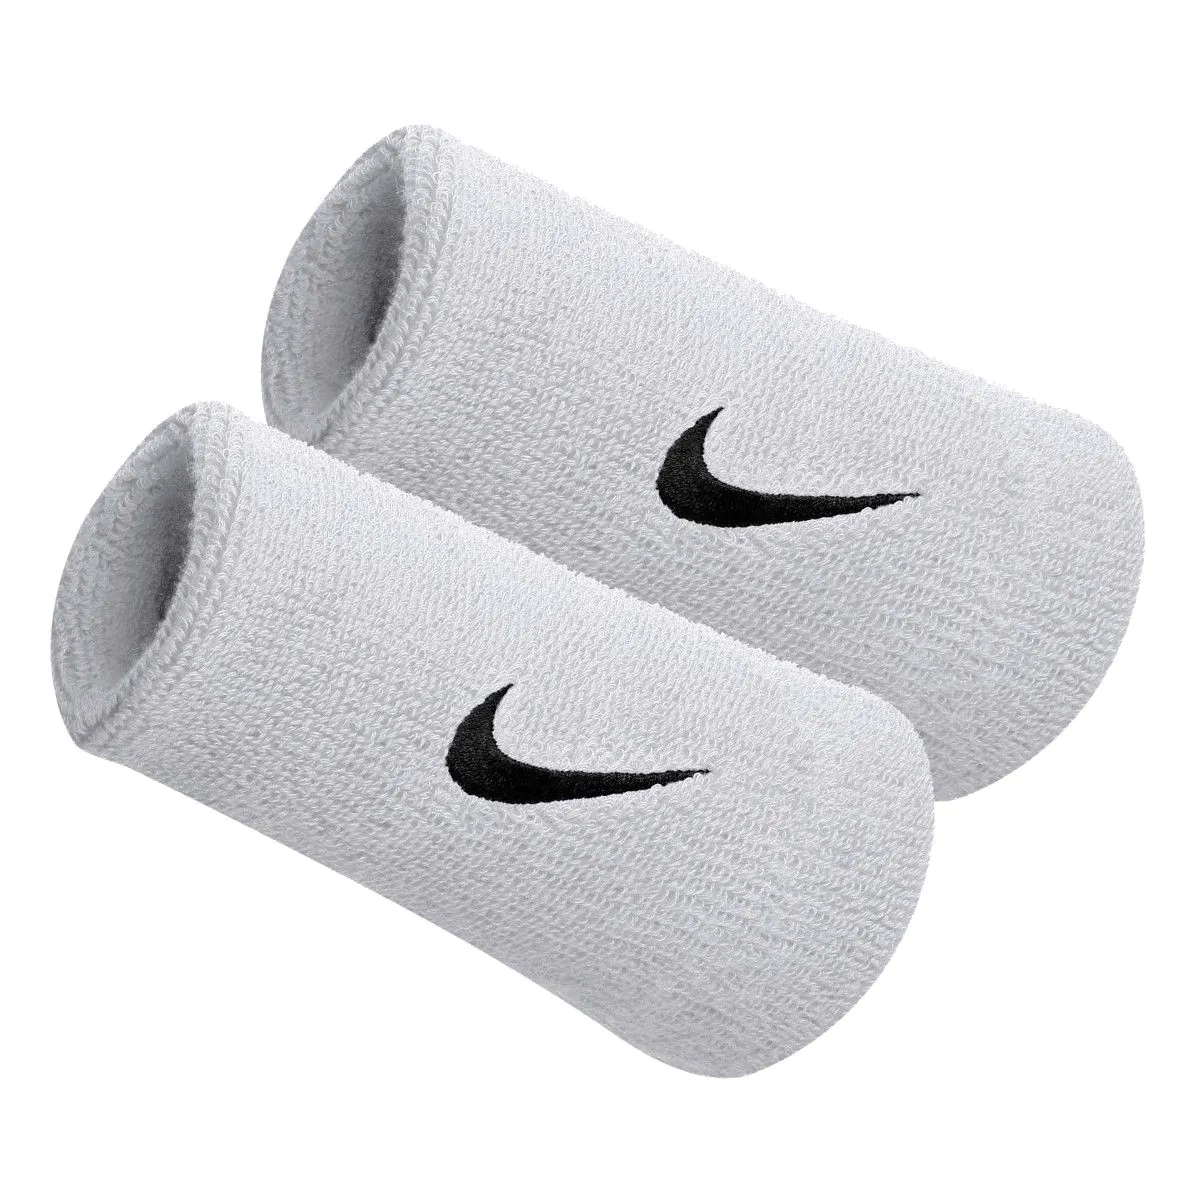 Nike Swoosh Double Wide Wristbands - set of AC0010-101